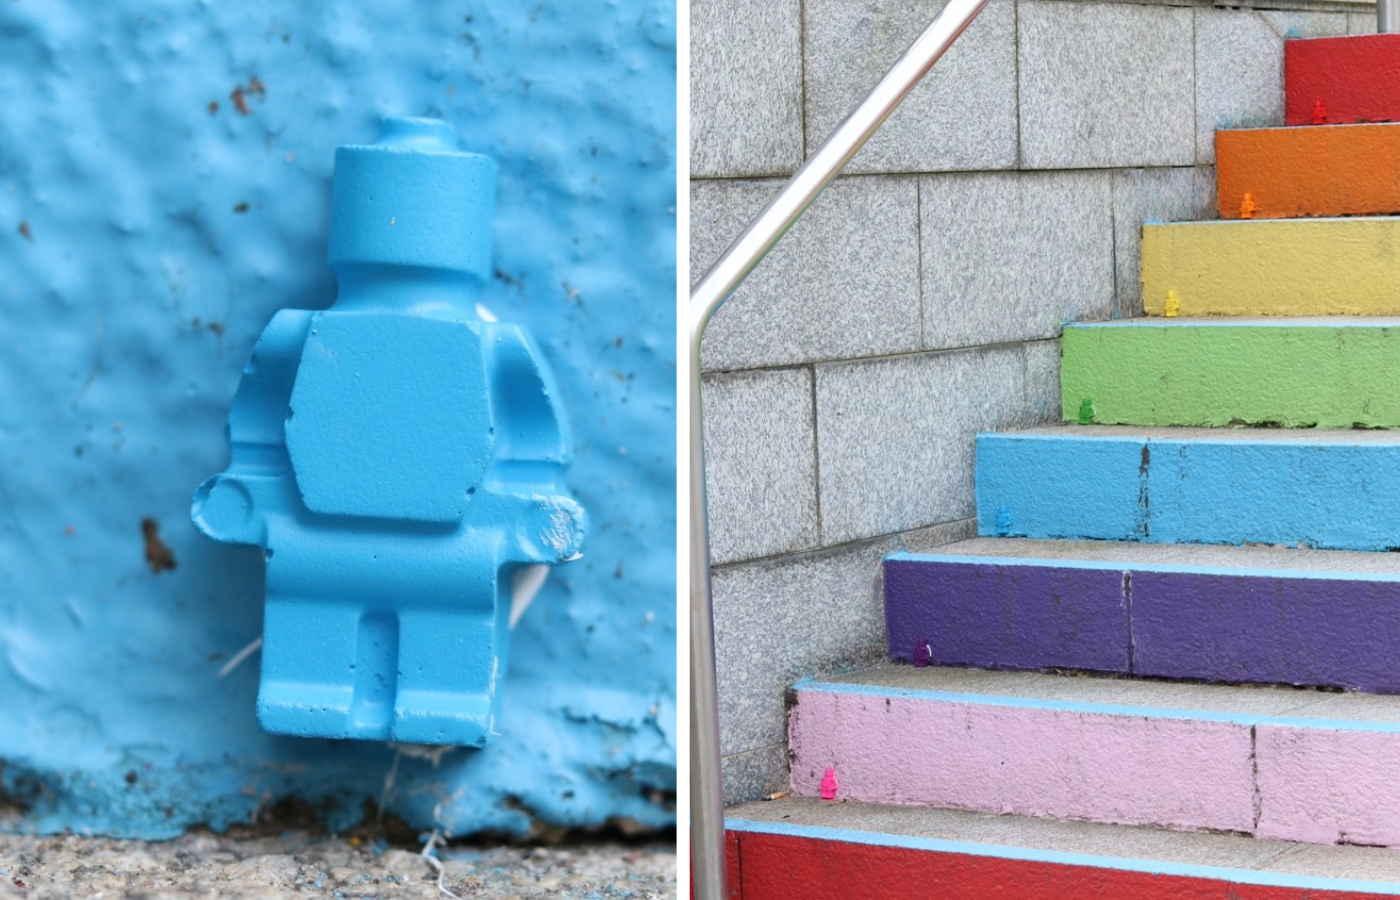 Lego-inspired concrete figures pop up across Aberdeen.